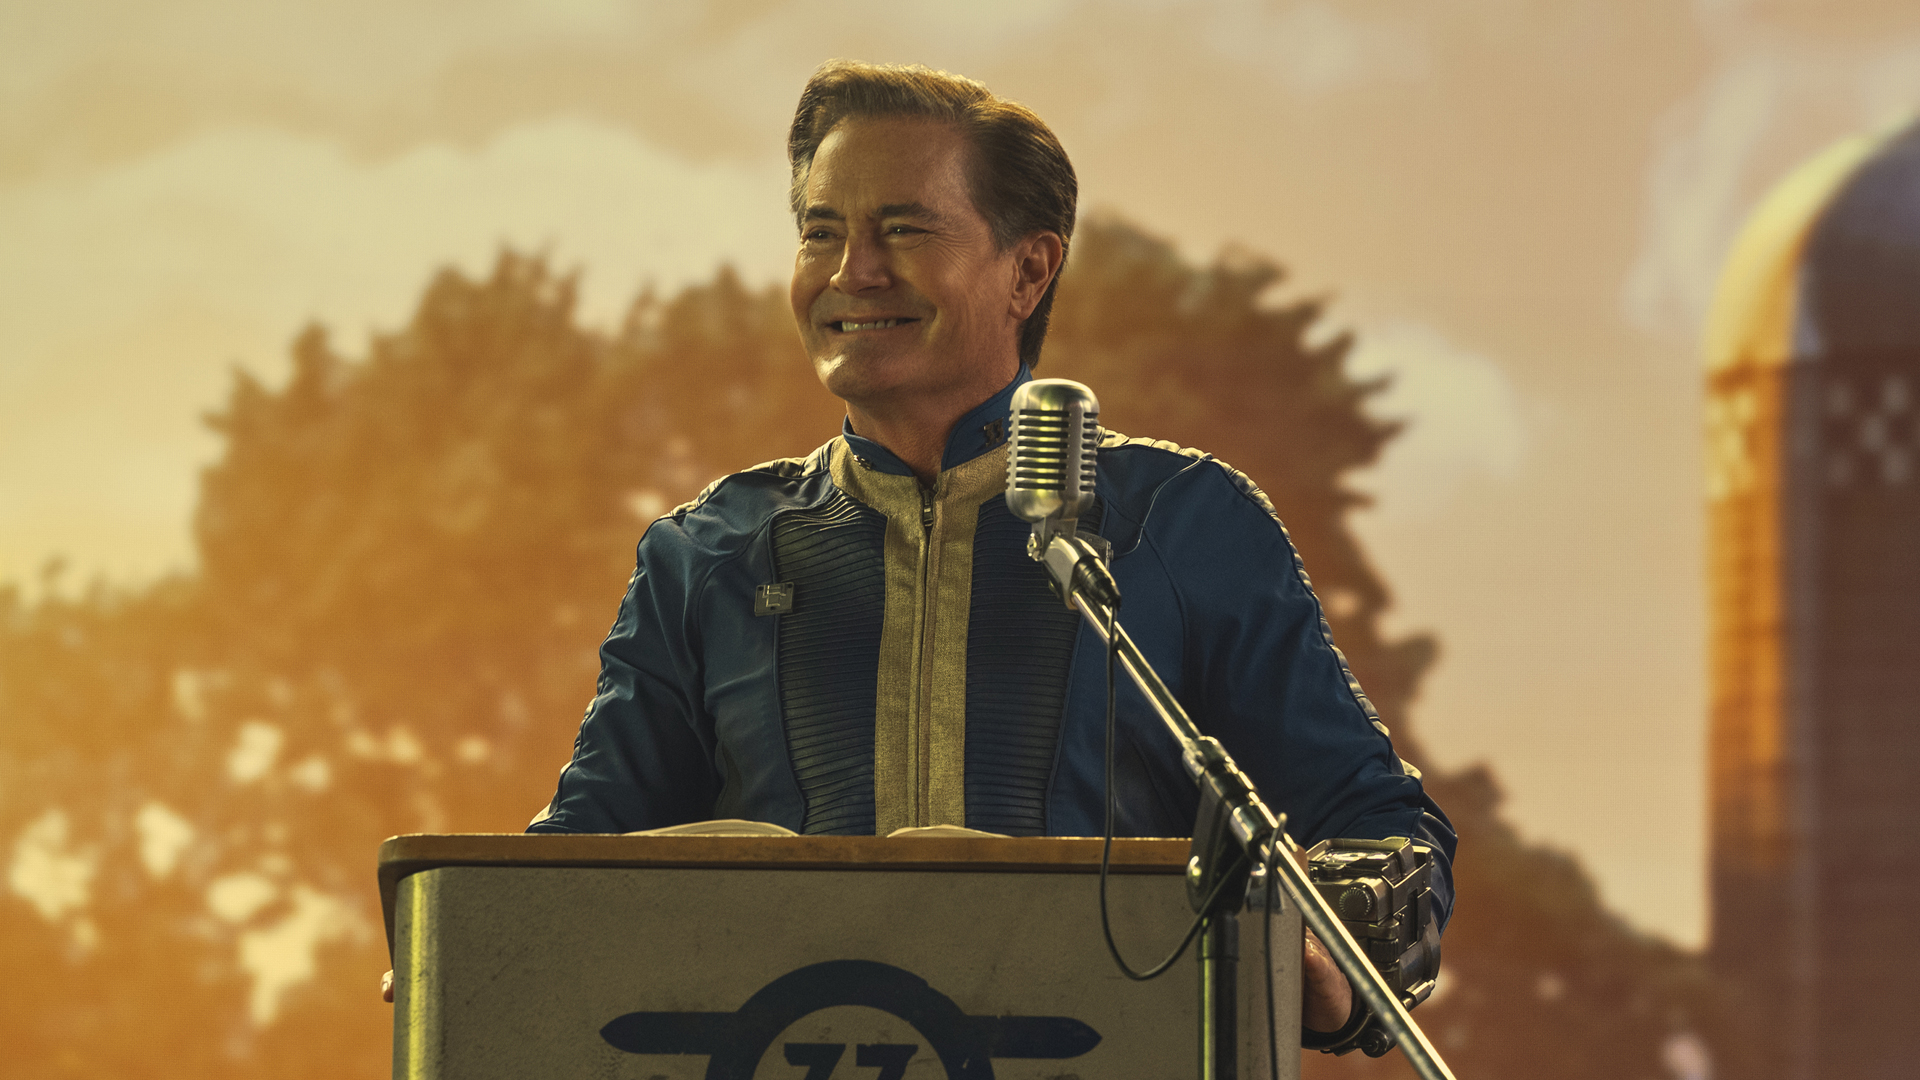 Hank MacLean da un discurso en un podio en la serie de televisión Fallout de Amazon